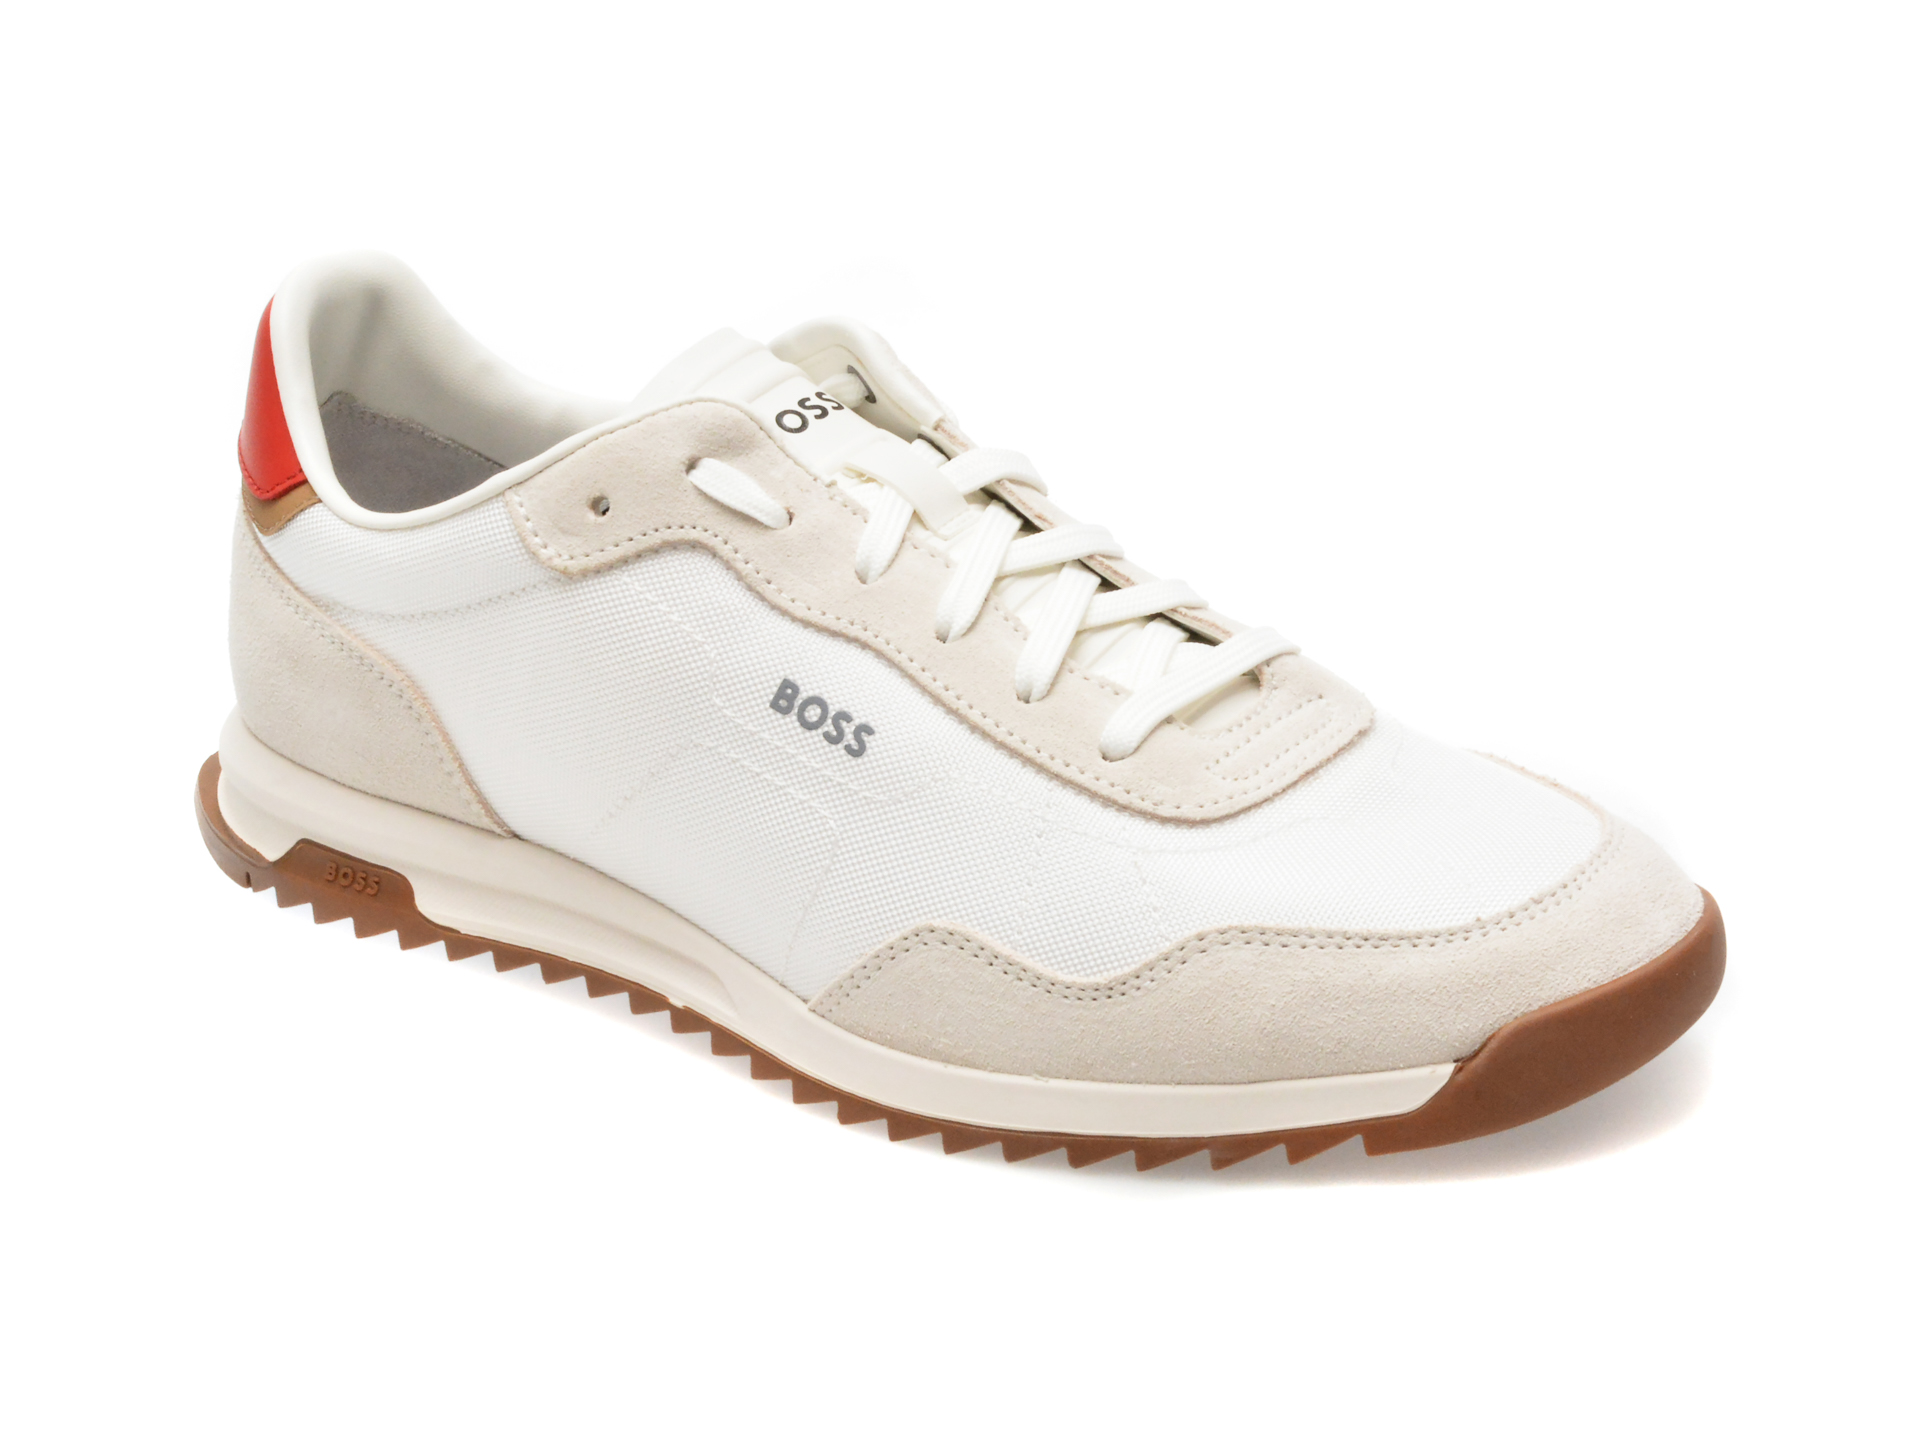 Pantofi sport BOSS albi, 7276, din material textil si piele intoarsa